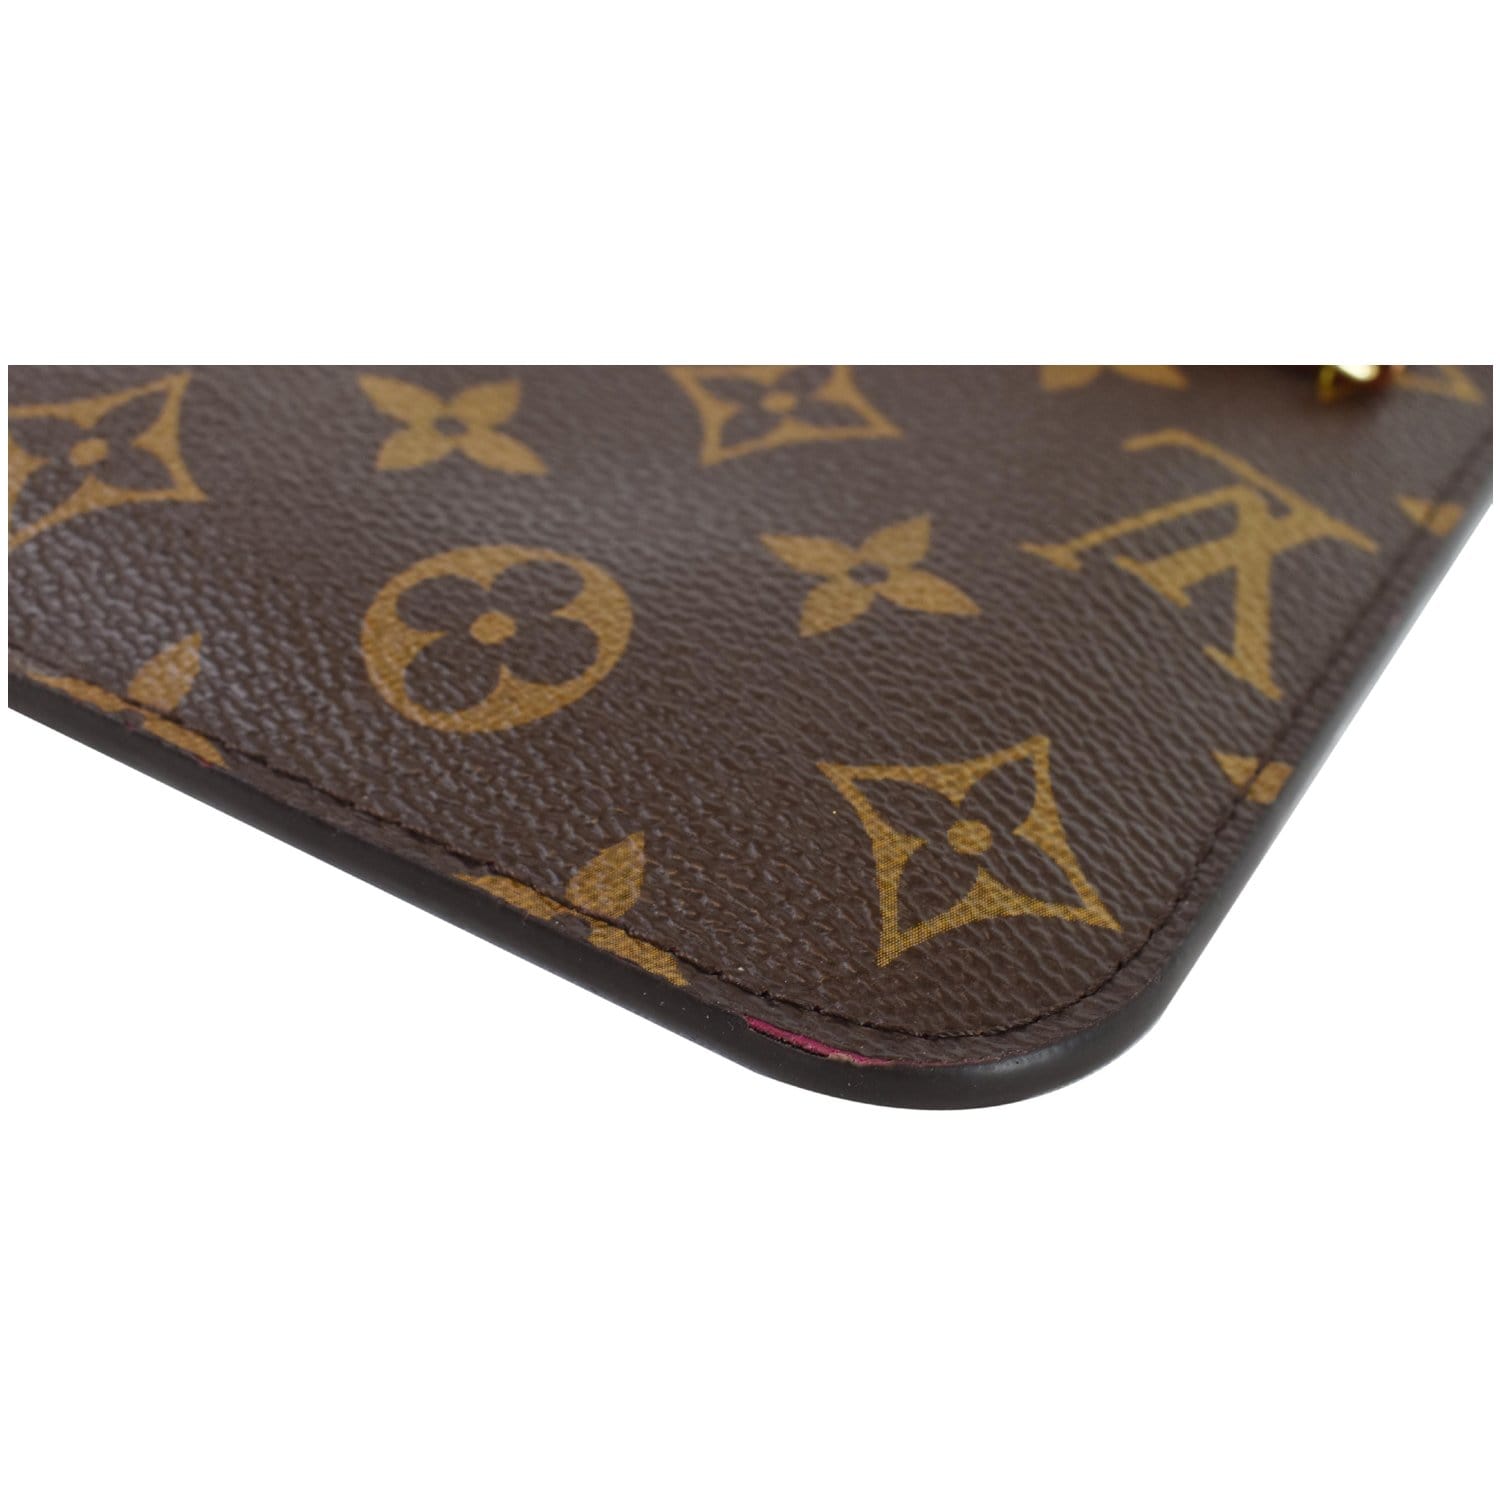 Louis Vuitton Ebene Monogram Coated Canvas Félicie Pochette Gold Hardware, 2021-2022 (Like New), Brown Womens Handbag